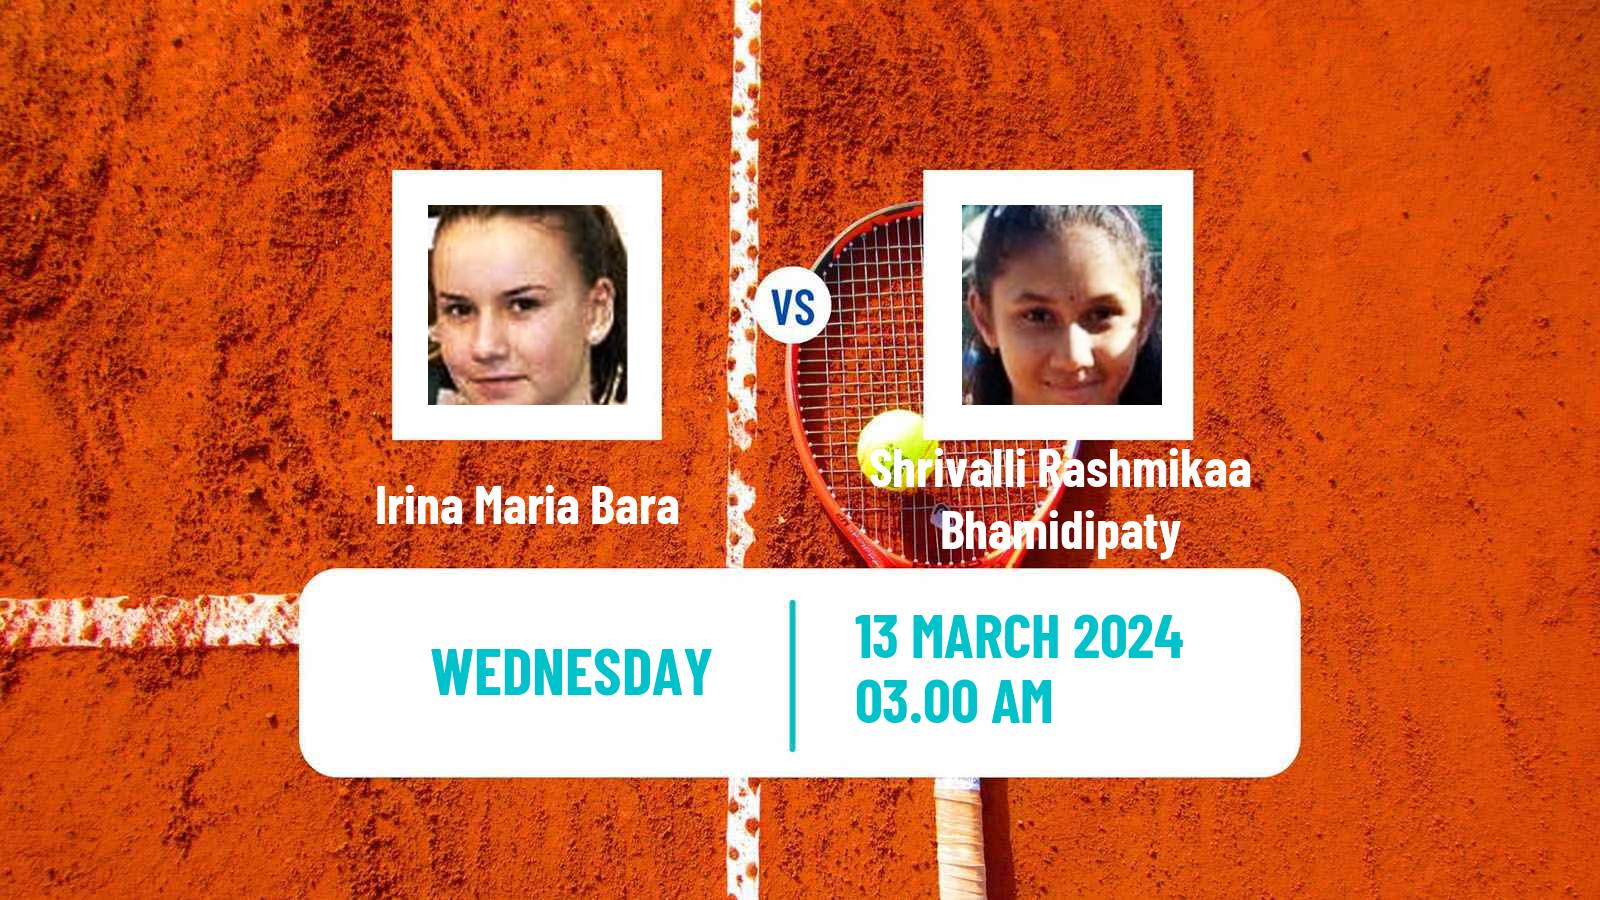 Tennis ITF W35 Indore Women Irina Maria Bara - Shrivalli Rashmikaa Bhamidipaty